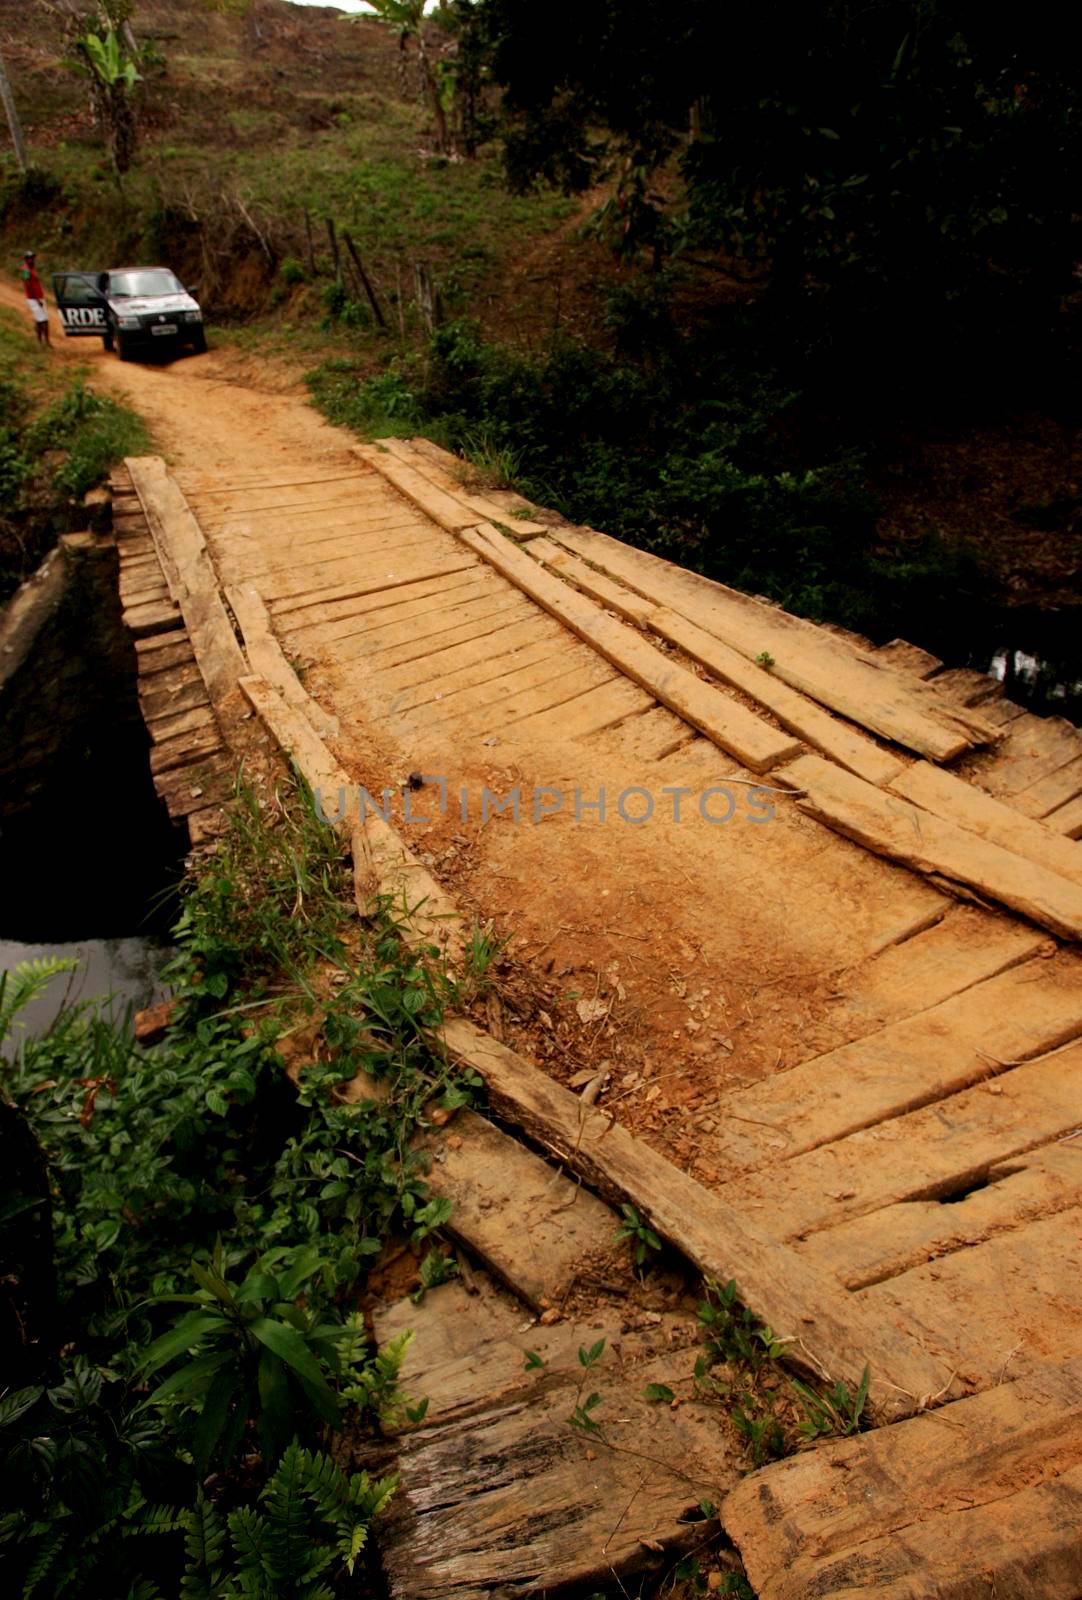 guaratinga, bahia / brazil - august 18, 2010: The wooden bridge over the Mineiro stream in the rural area of the city of Guaratinga.